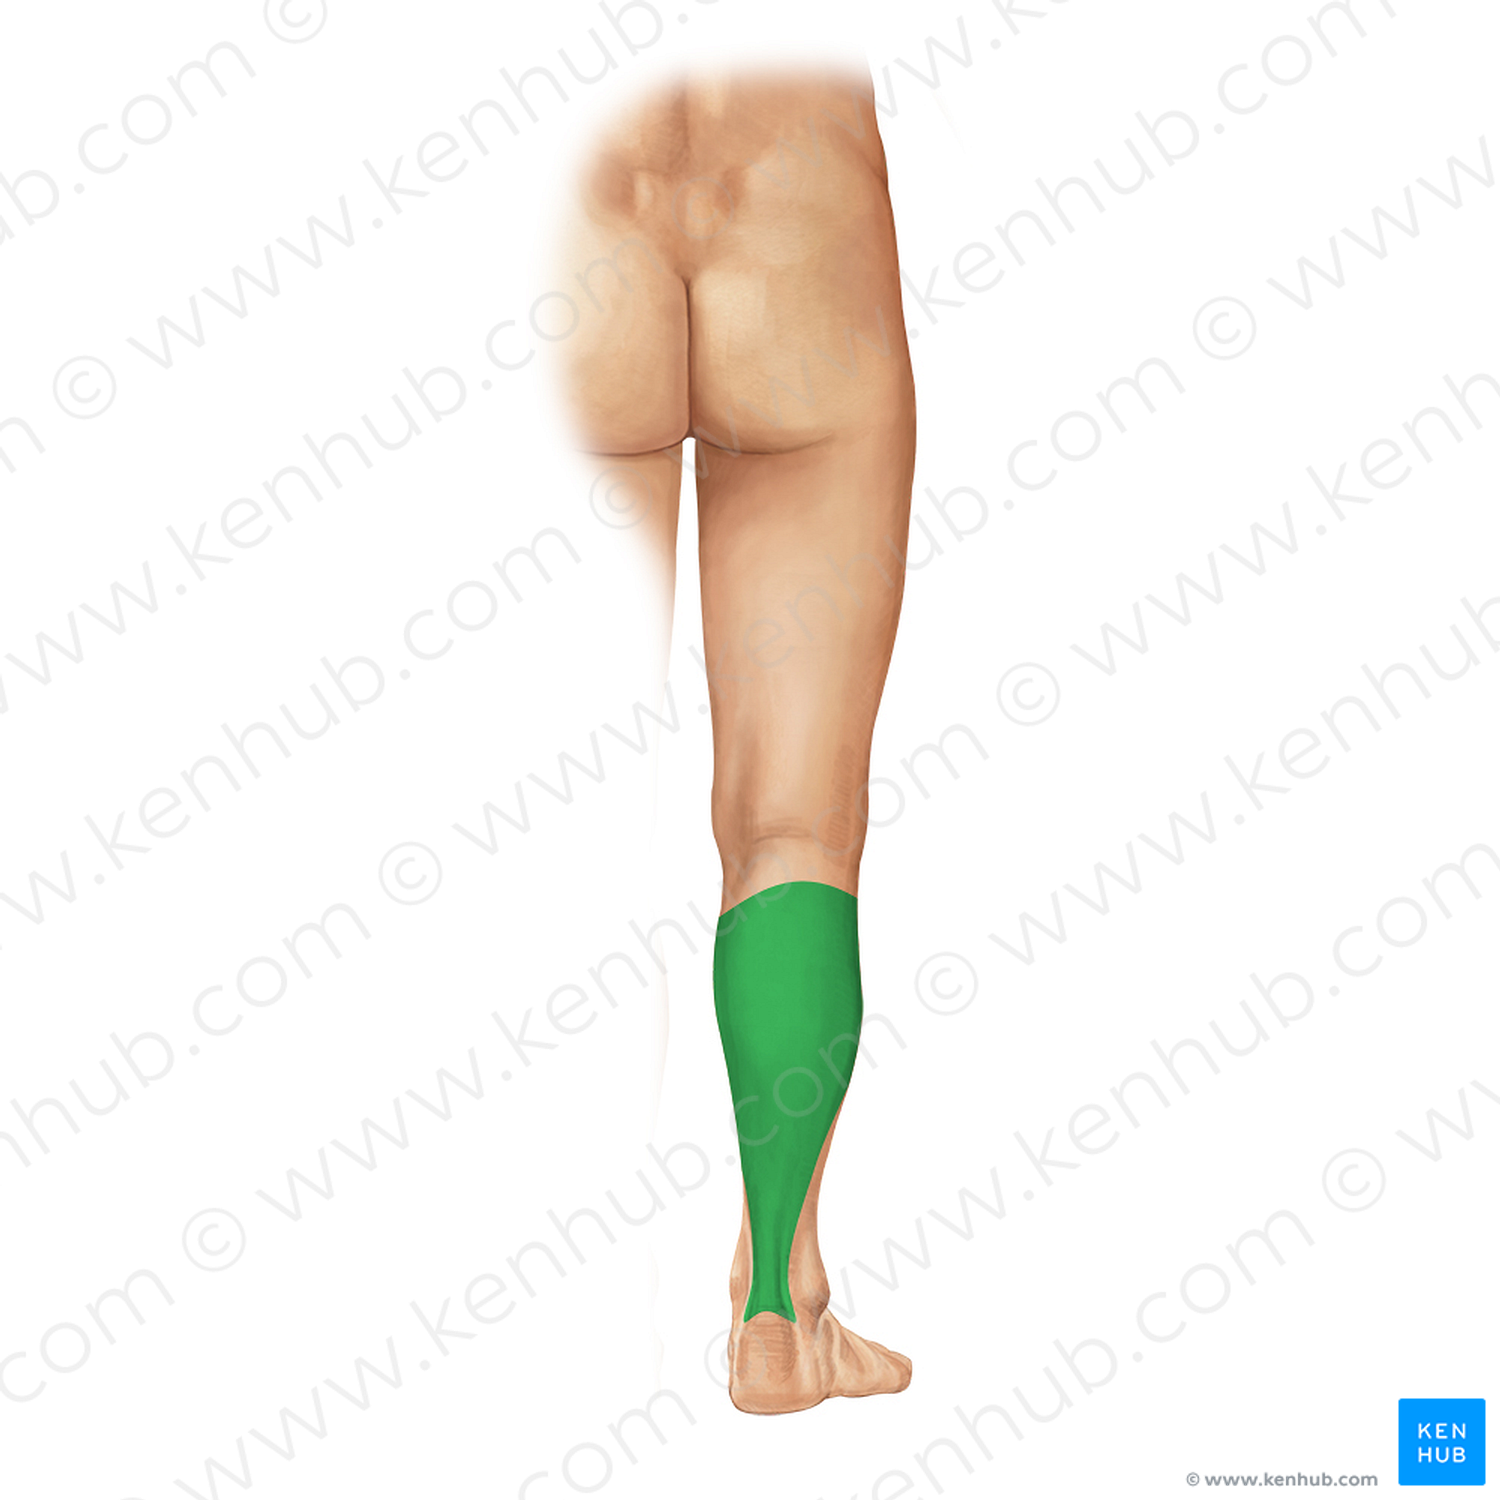 Posterior region of leg (#407)